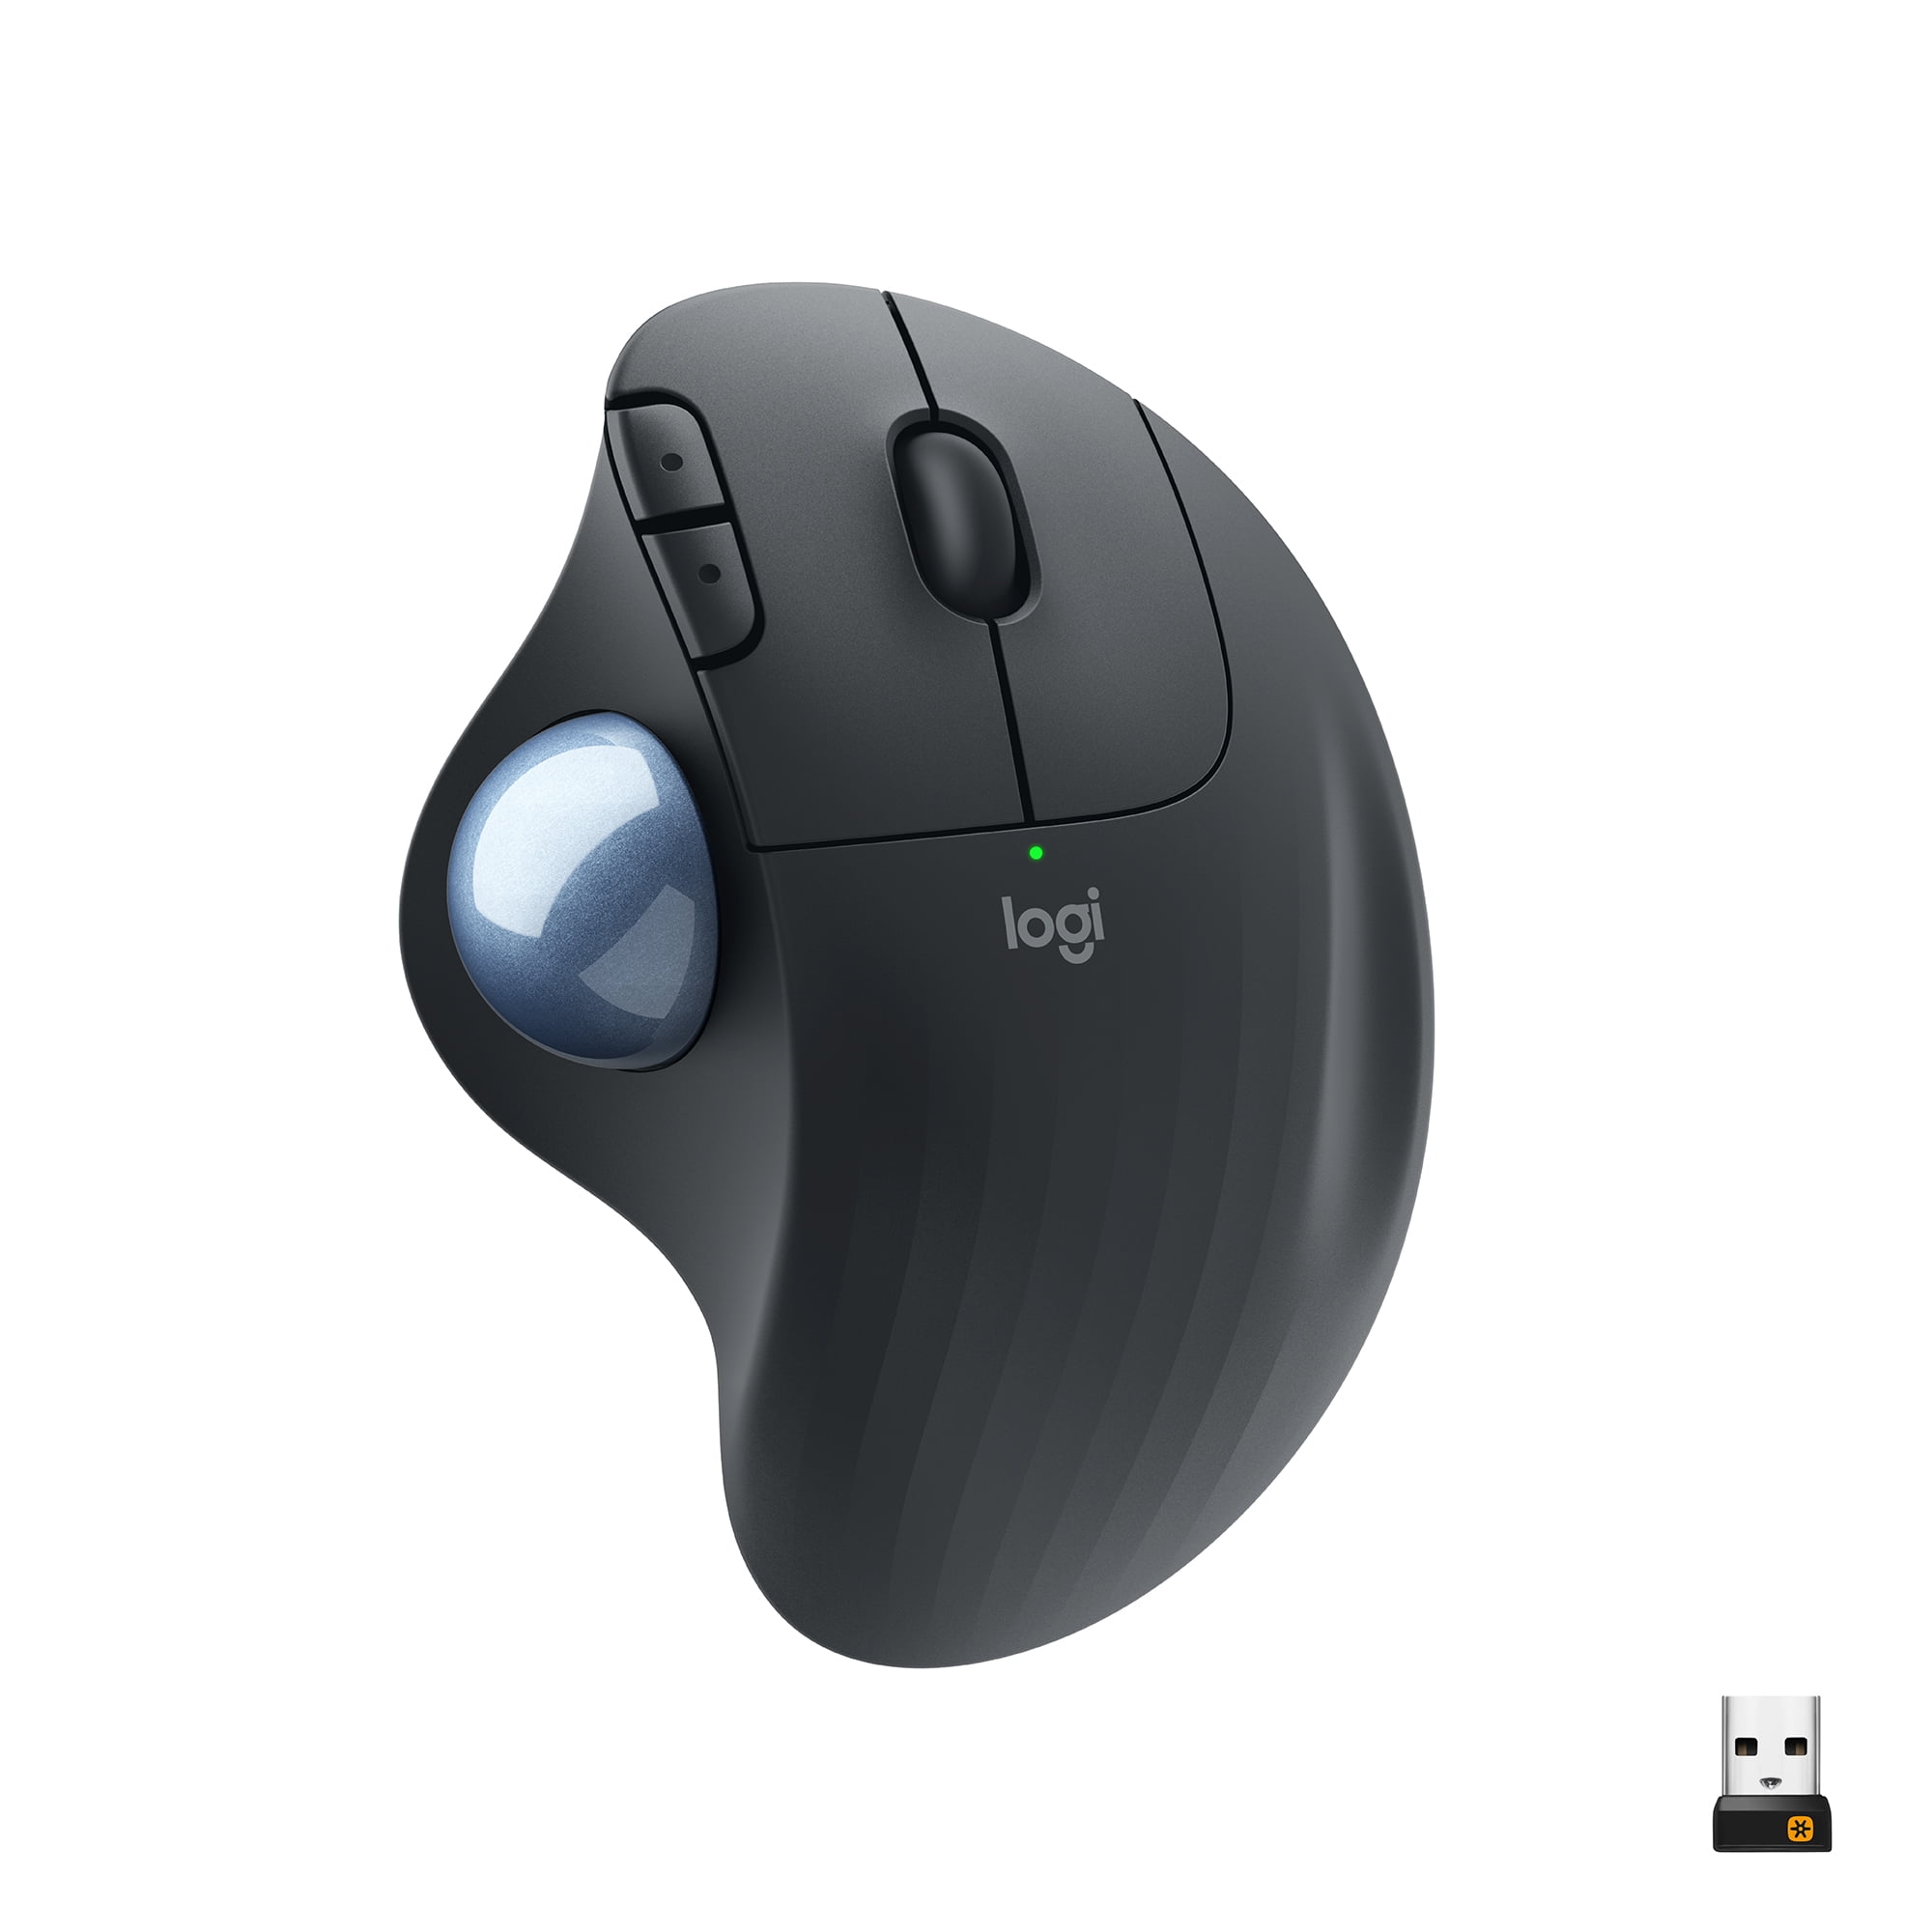 Fordøjelsesorgan Produktiv Bøje Logitech ERGO M575 Wireless Trackball Mouse, Easy thumb control, Precision  and smooth tracking, Ergonomic comfort design, Windows/Mac, Bluetooth, USB  - Graphite - Walmart.com